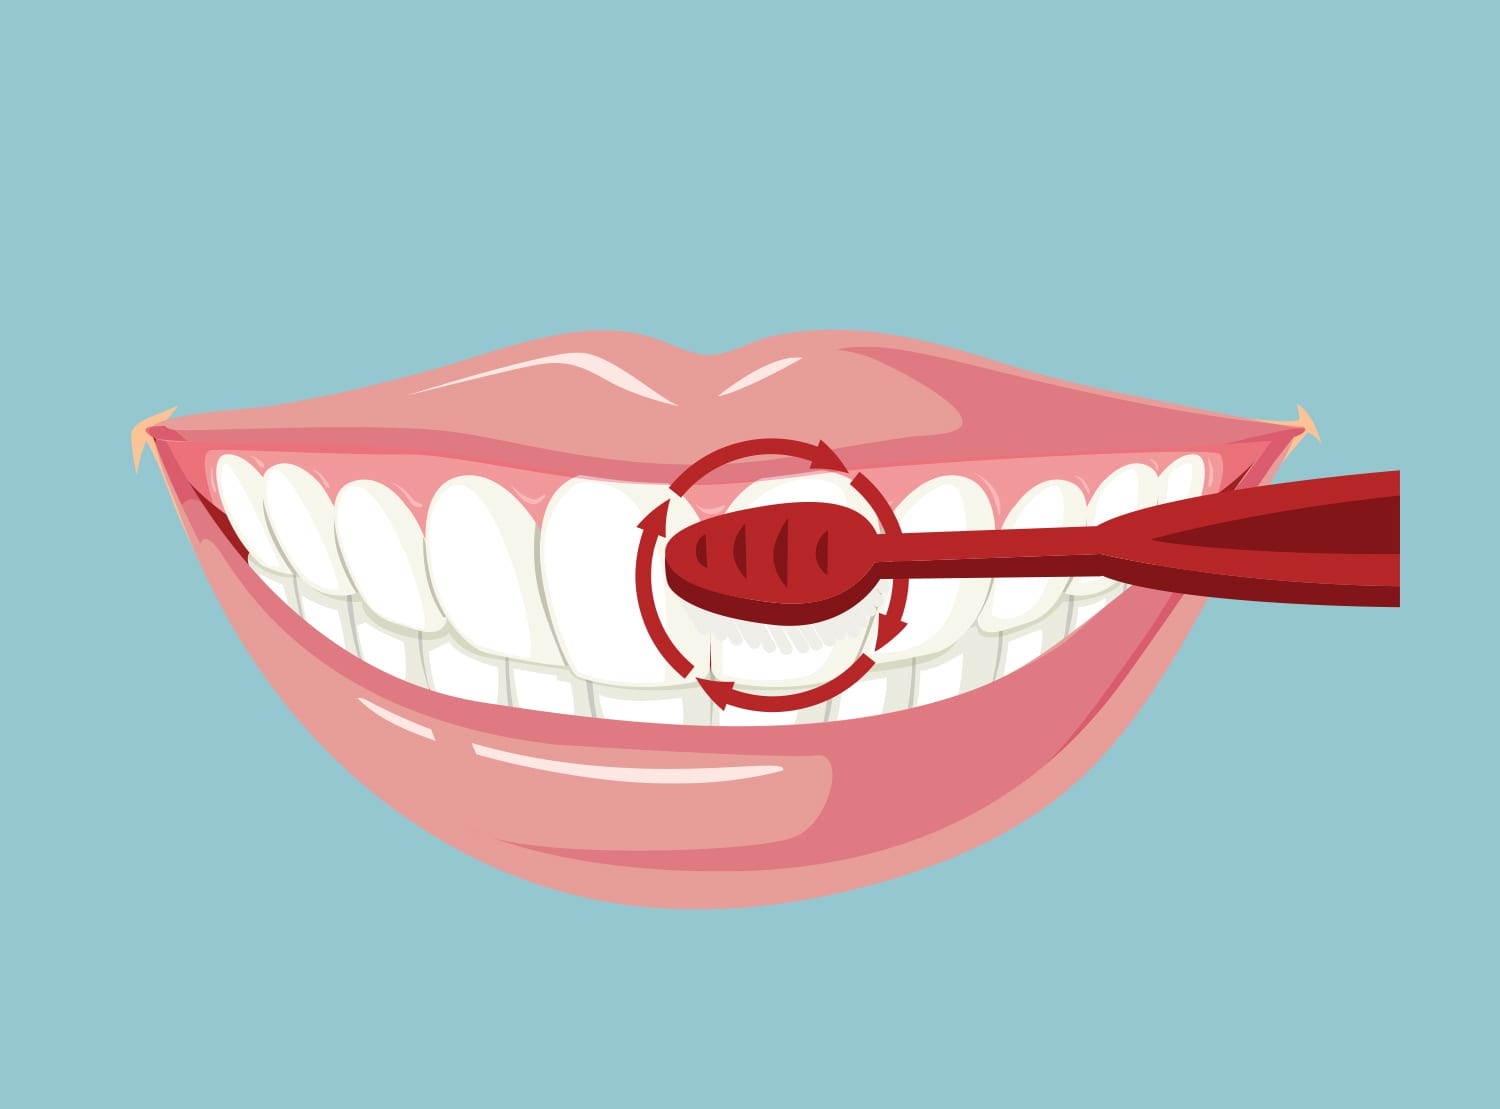 Ways to prevent gum disease